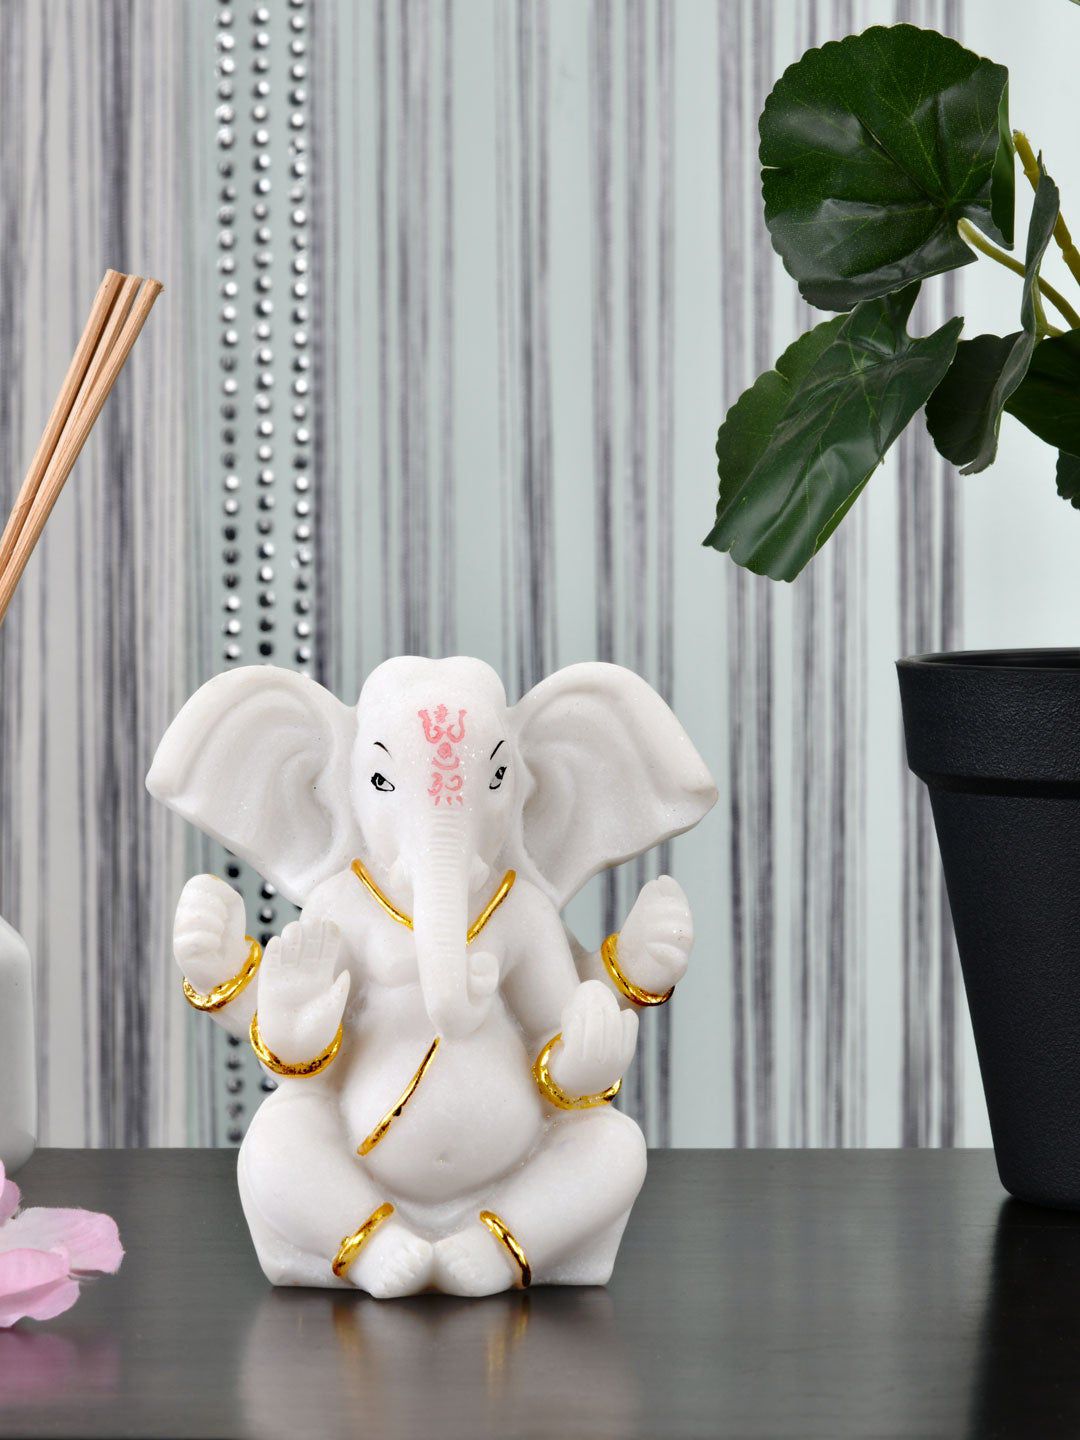 Athome by Nilkamal White Ganesha Showpiece Price in India